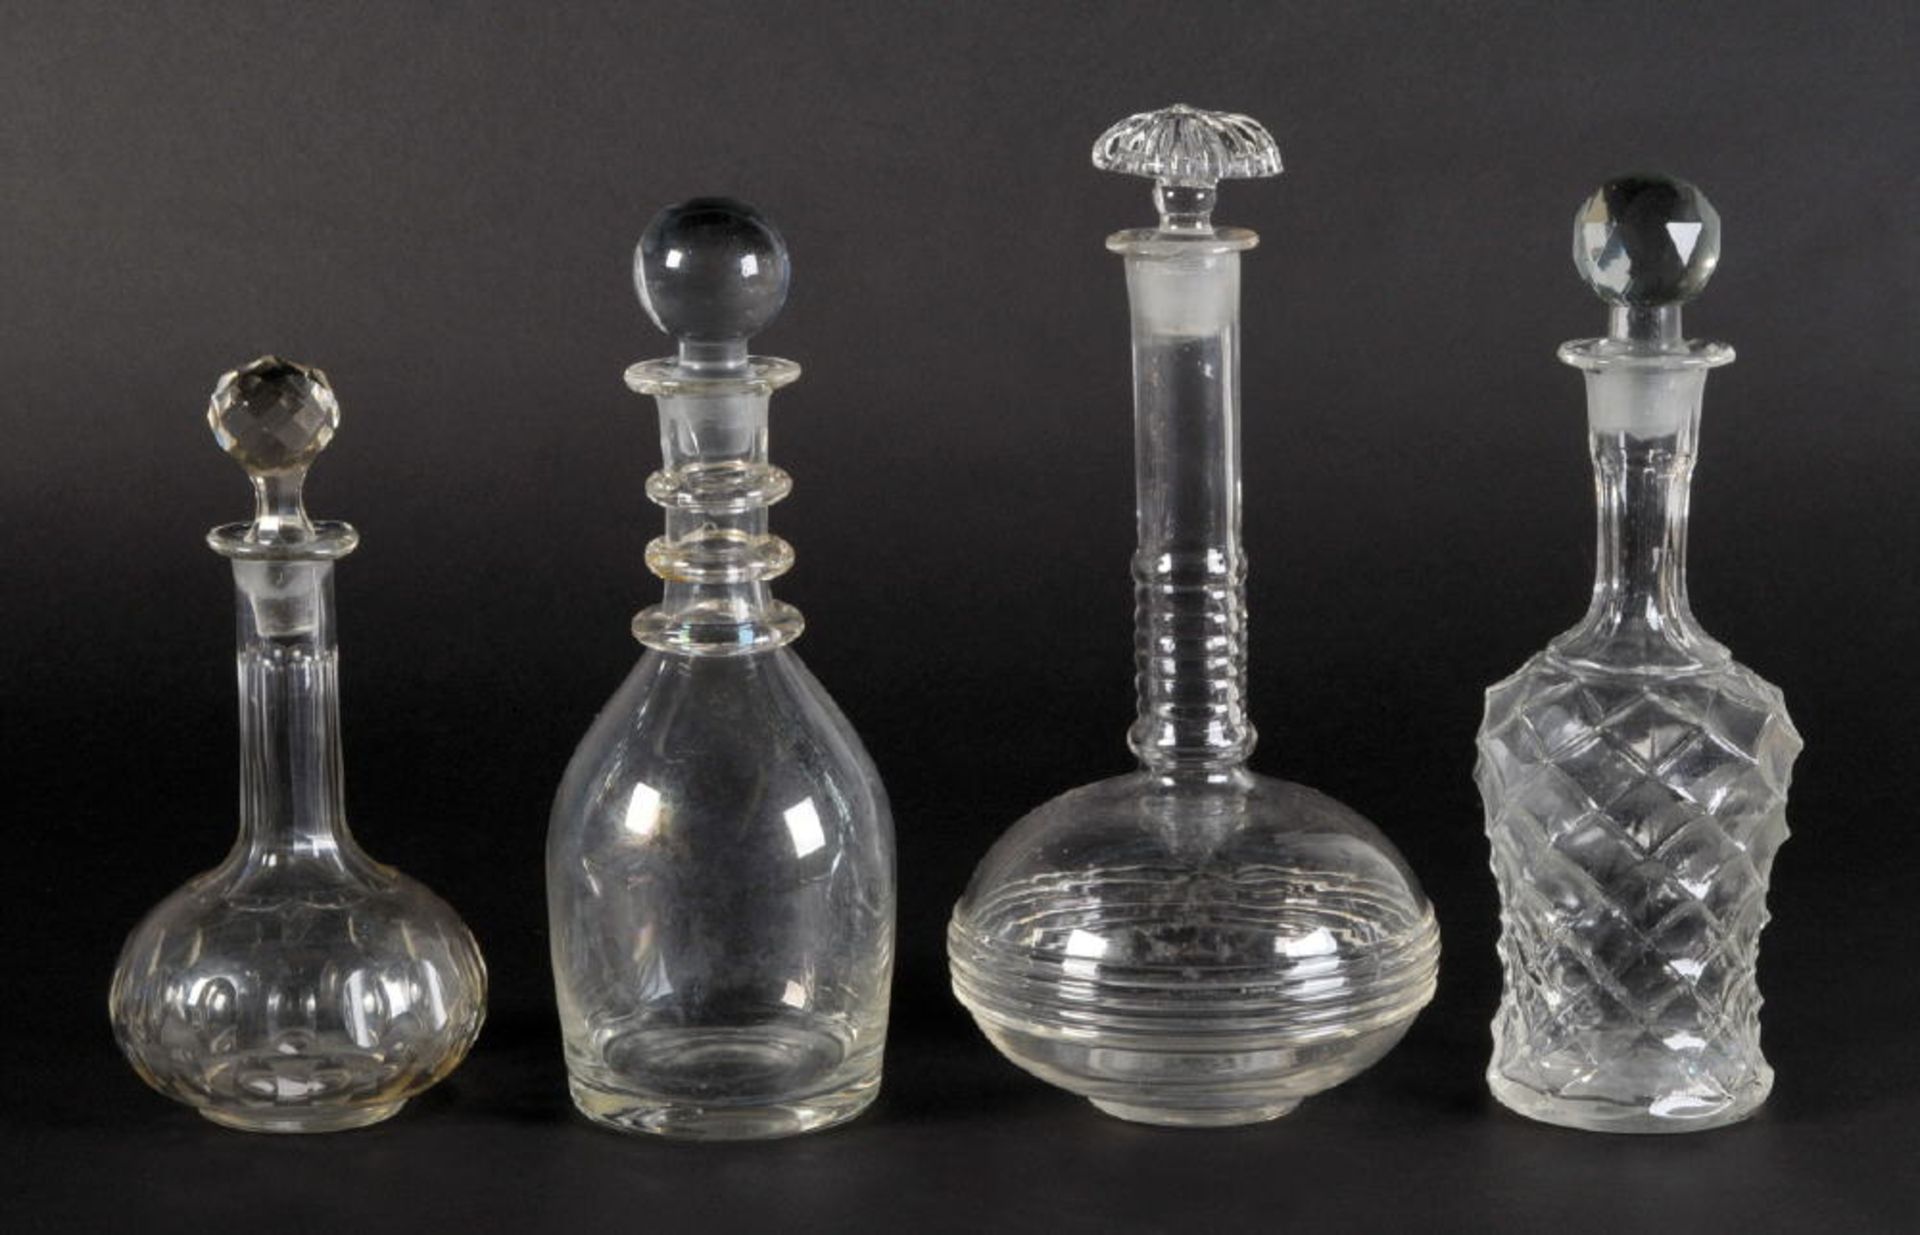 Karaffen mit Stöpseln, 4 Stückfarbloses Glas/Pressglas, versch. Formen u. Dekors, H= 19-25 cm, 1